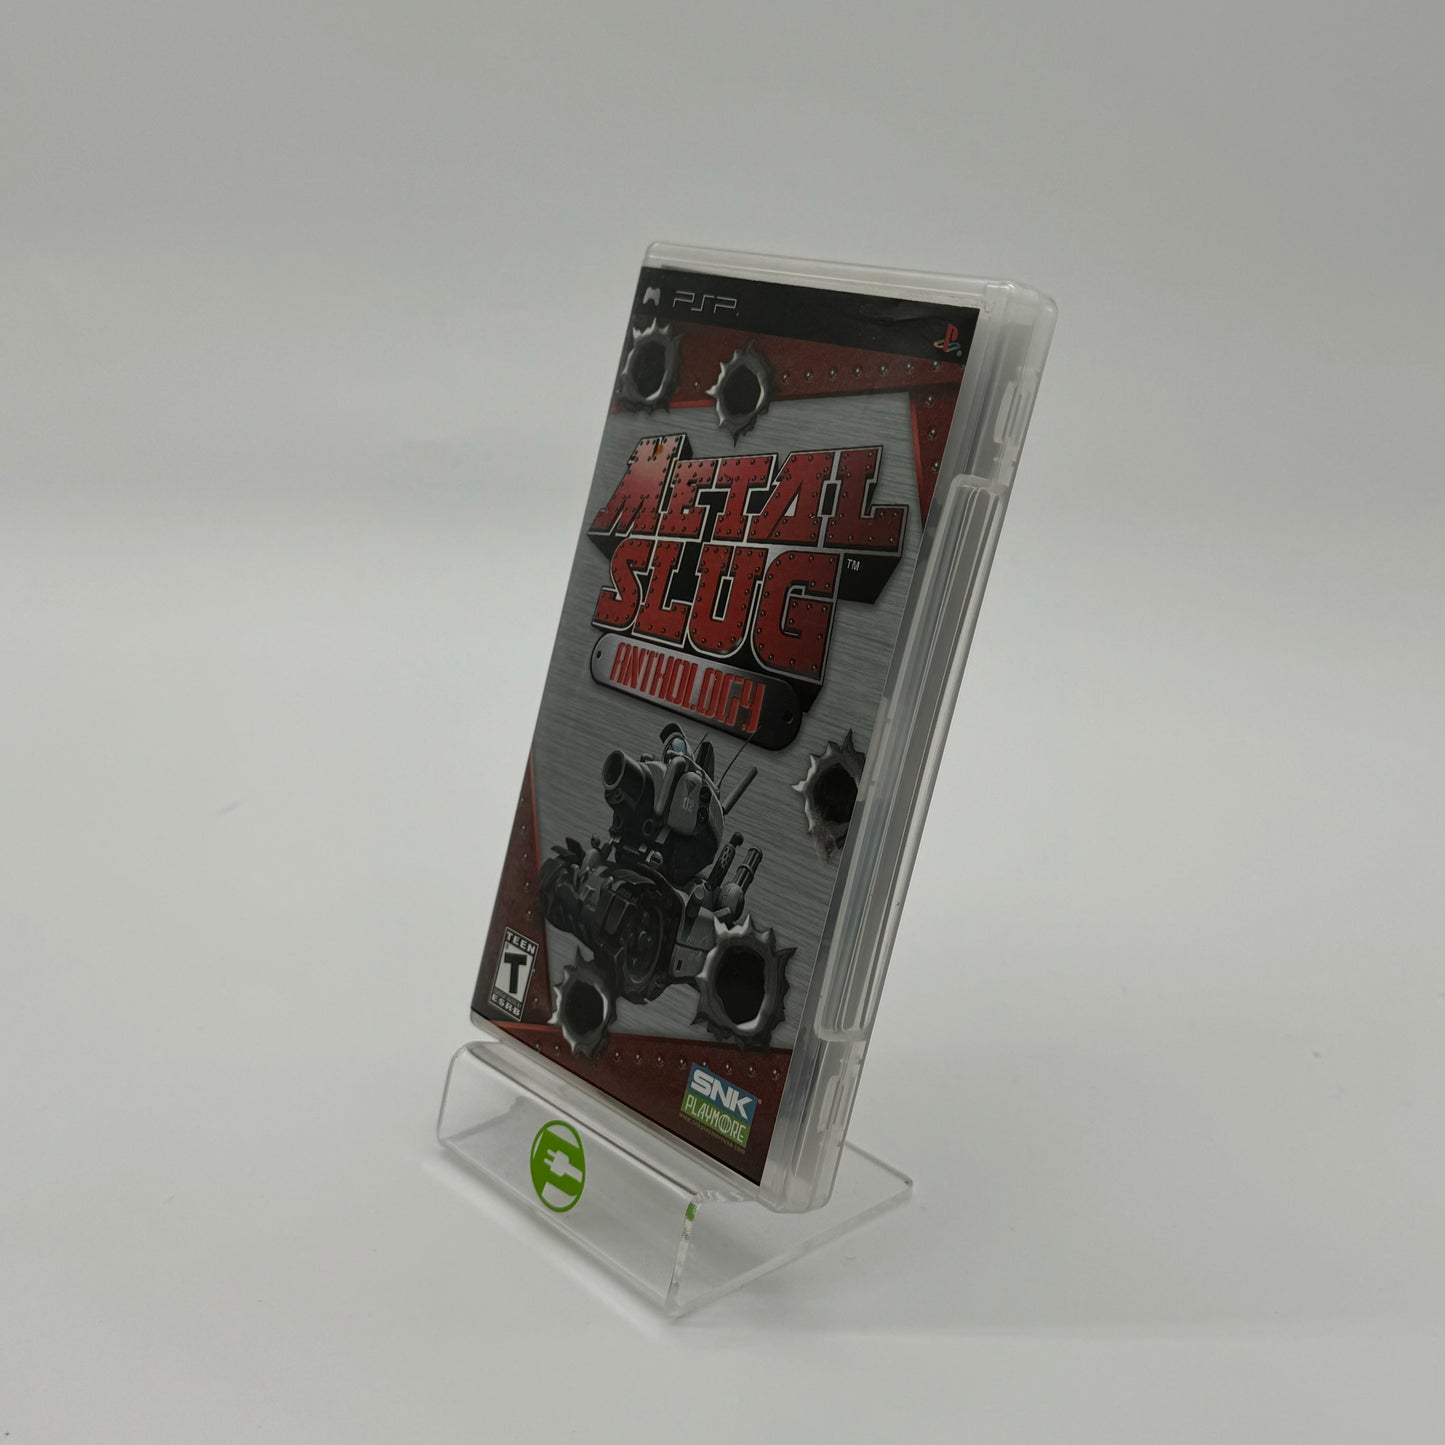 Metal Slug Anthology  (Sony PlayStation Portable PSP,  2007)